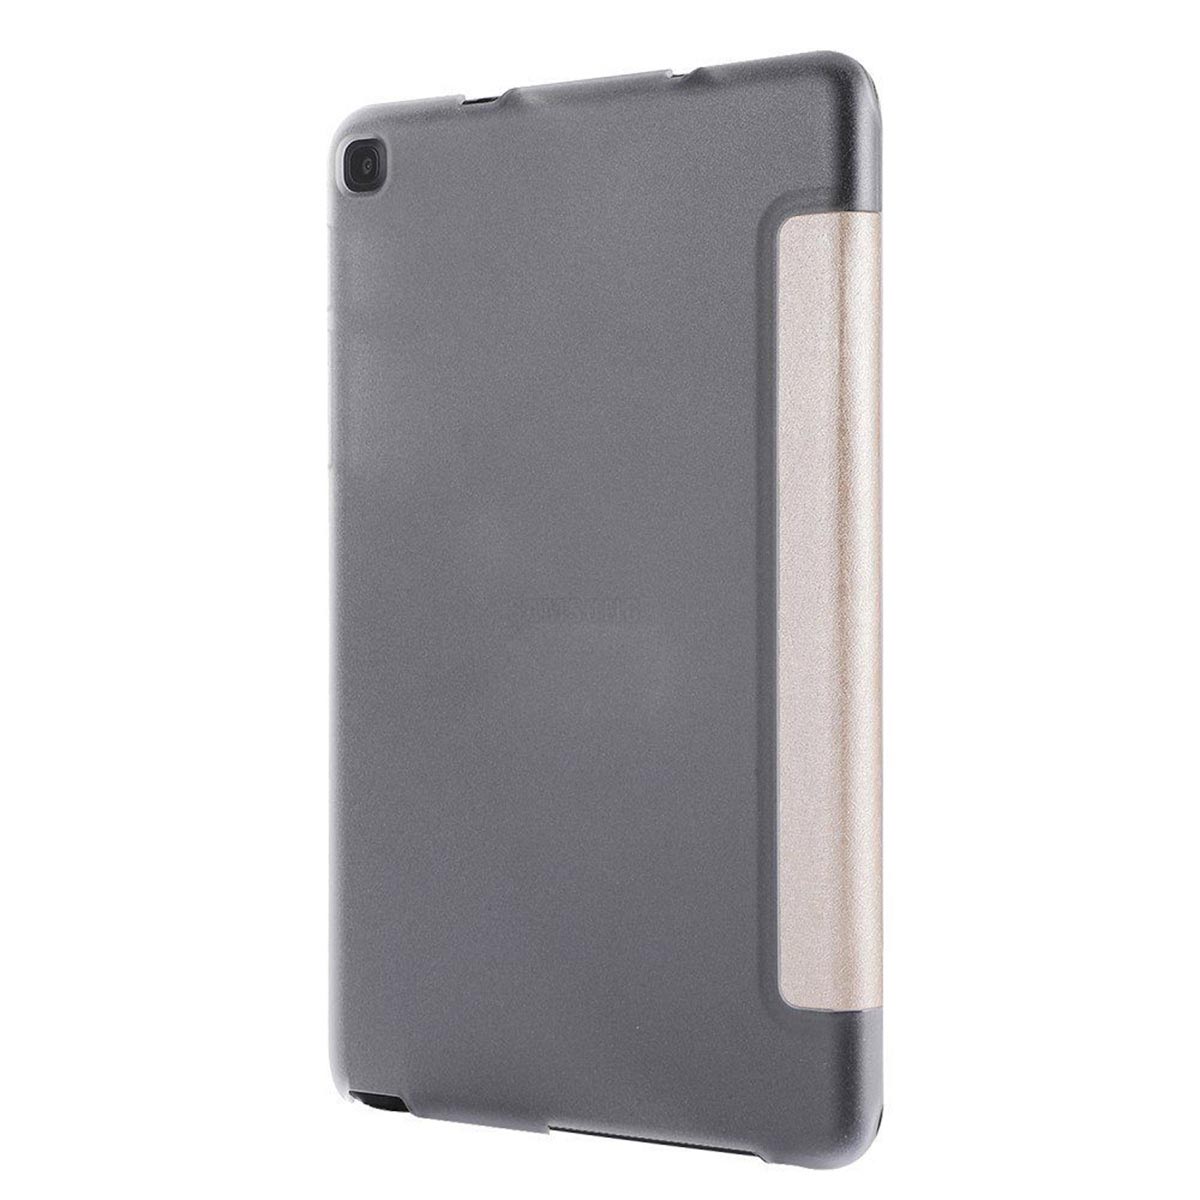 Чехол Smart Case для планшета SAMSUNG Galaxy Tab A 8.0 2019 (SM-T290, SM-T295), цвет золотистый